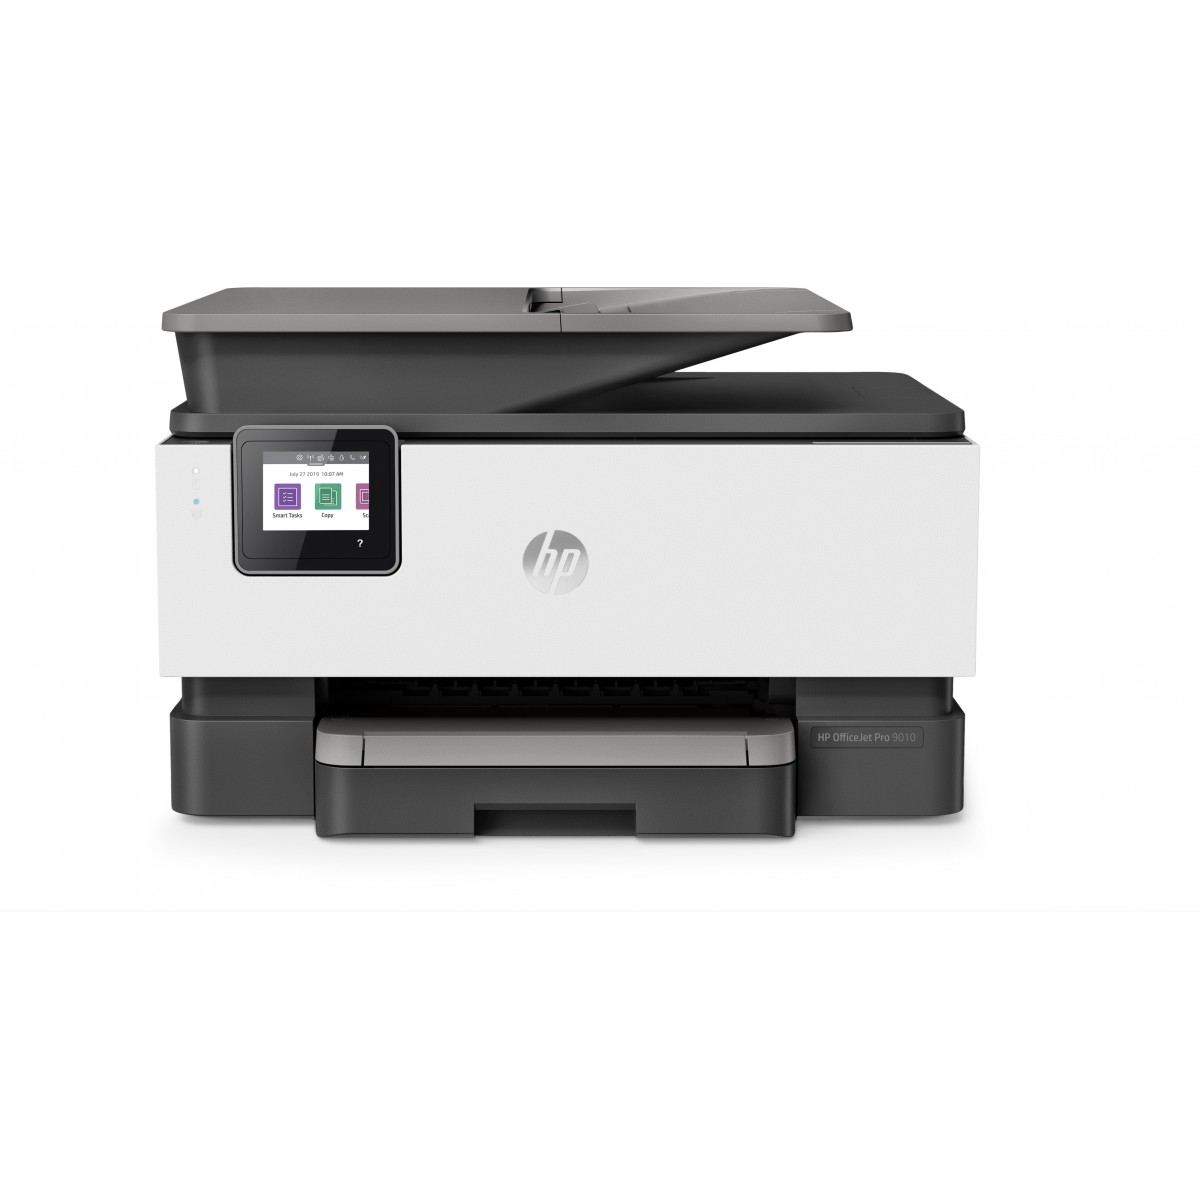 HP OfficeJet Pro 9010 - Thermal inkjet - Colour printing - 4800 x 1200 DPI - A4 - Direct printing - Black - Grey - White